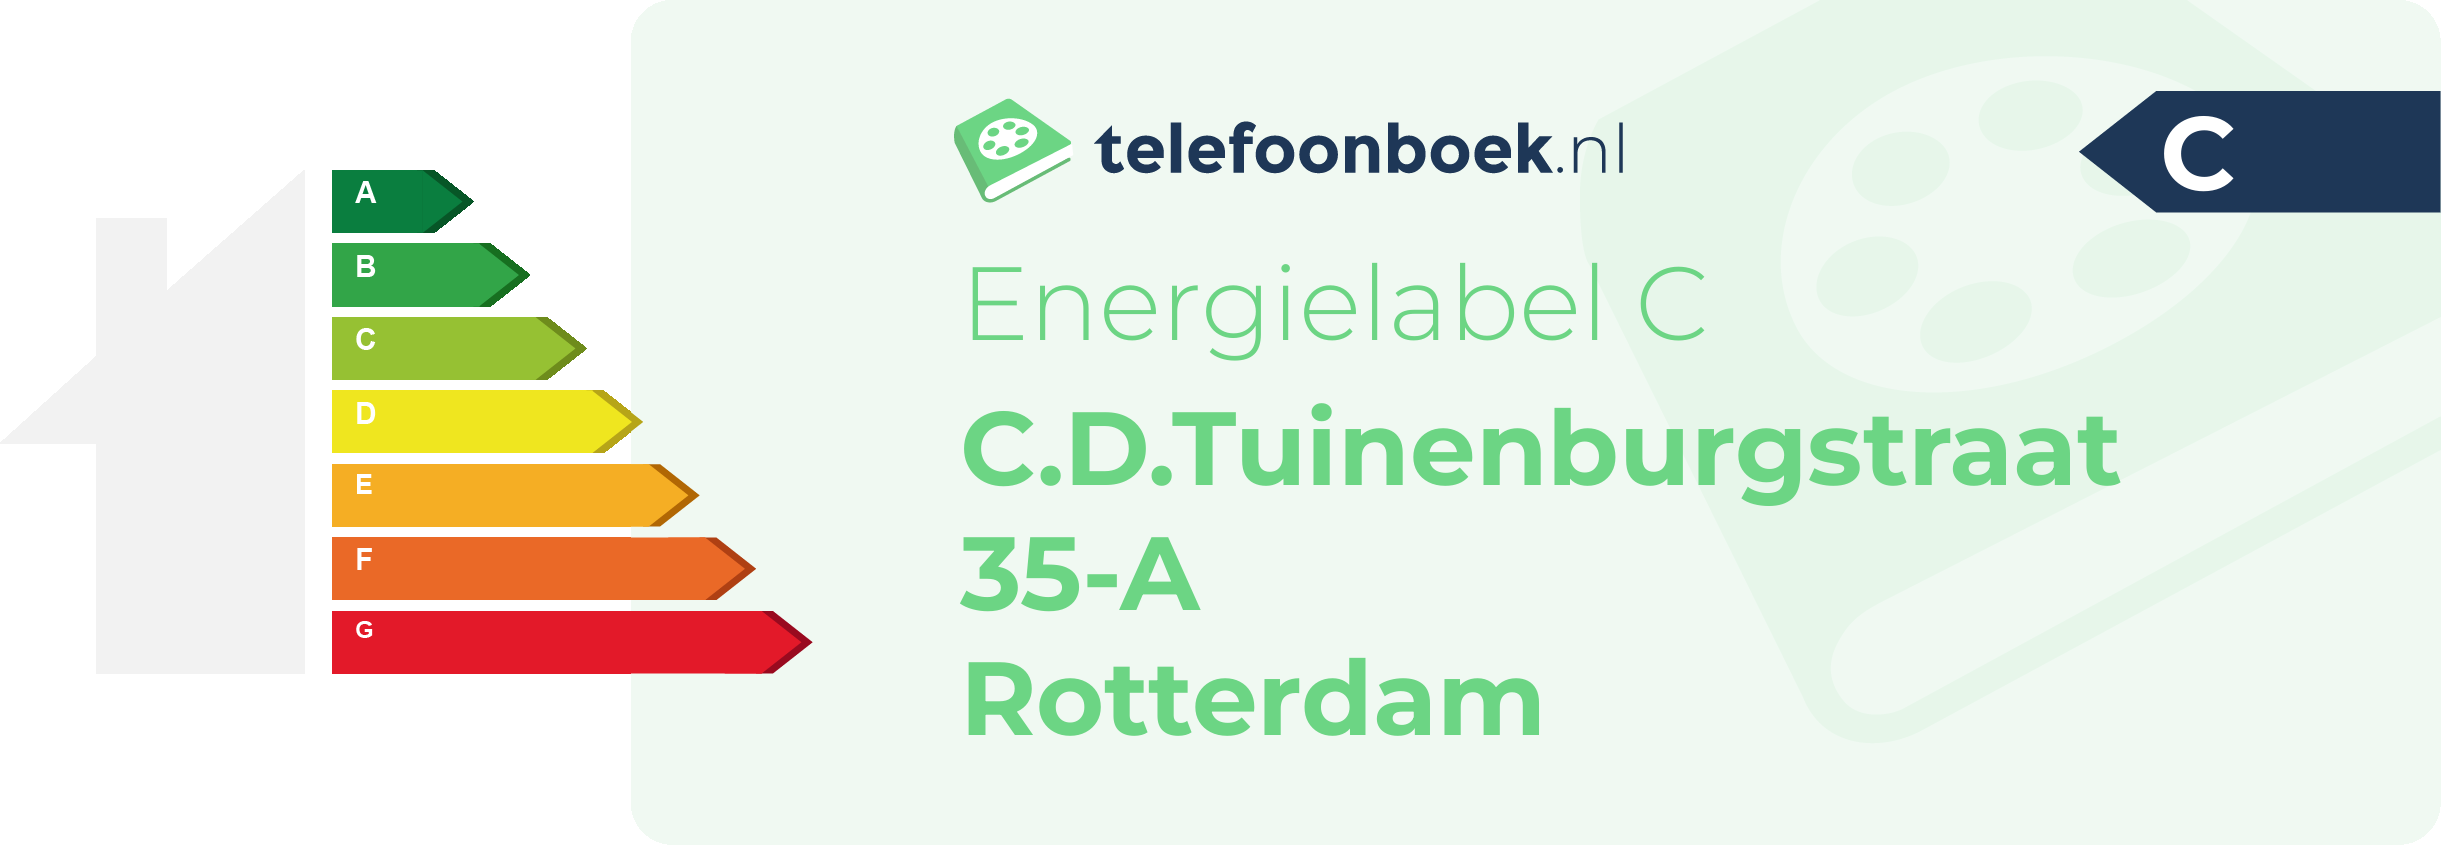 Energielabel C.D.Tuinenburgstraat 35-A Rotterdam